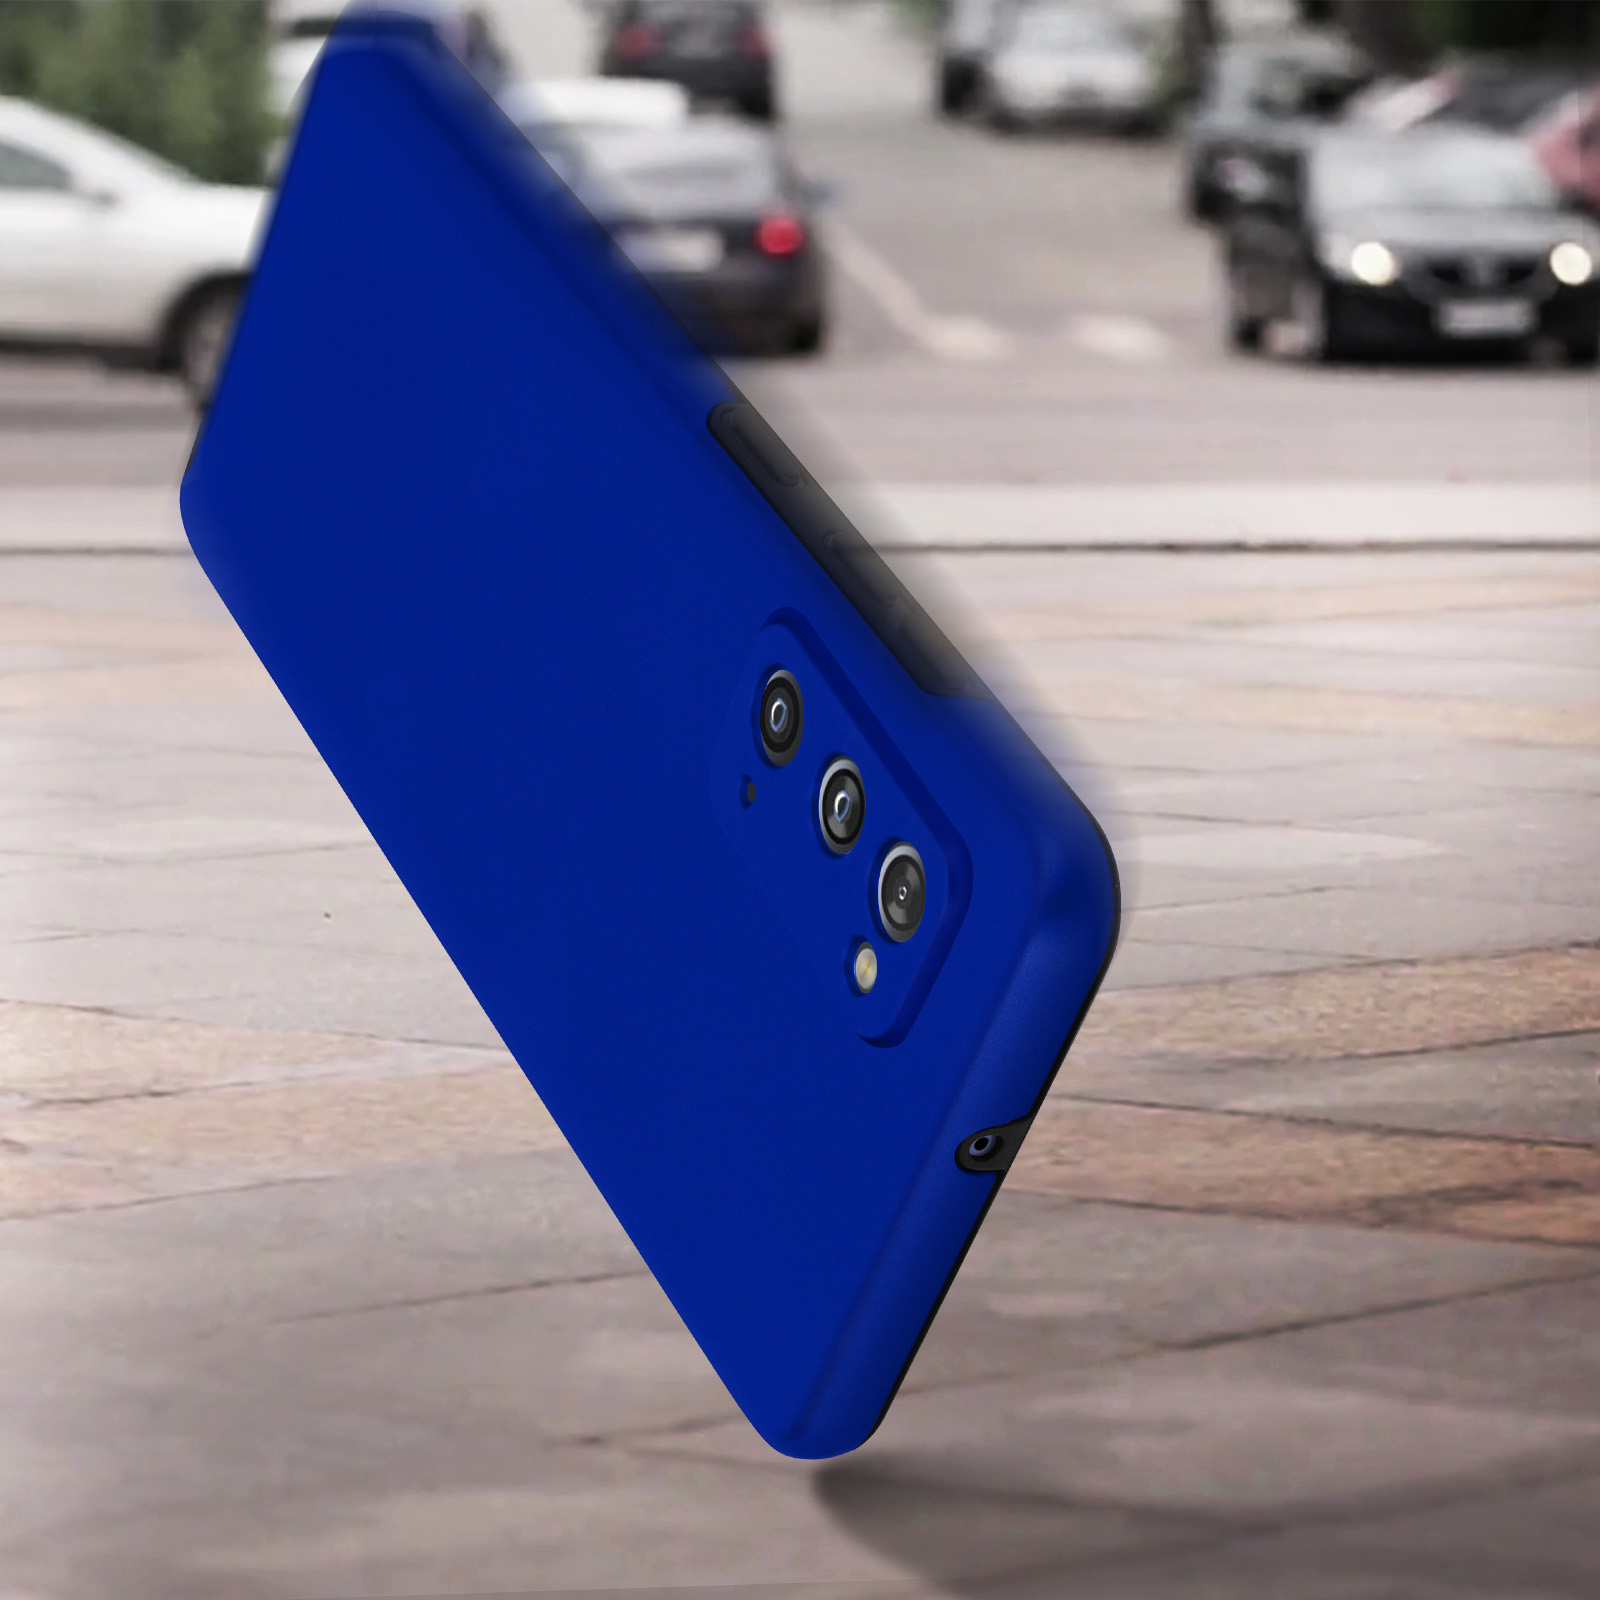 AVIZAR Rundumschutz Samsung, Series, Cover, Blau S20 Galaxy FE, Full